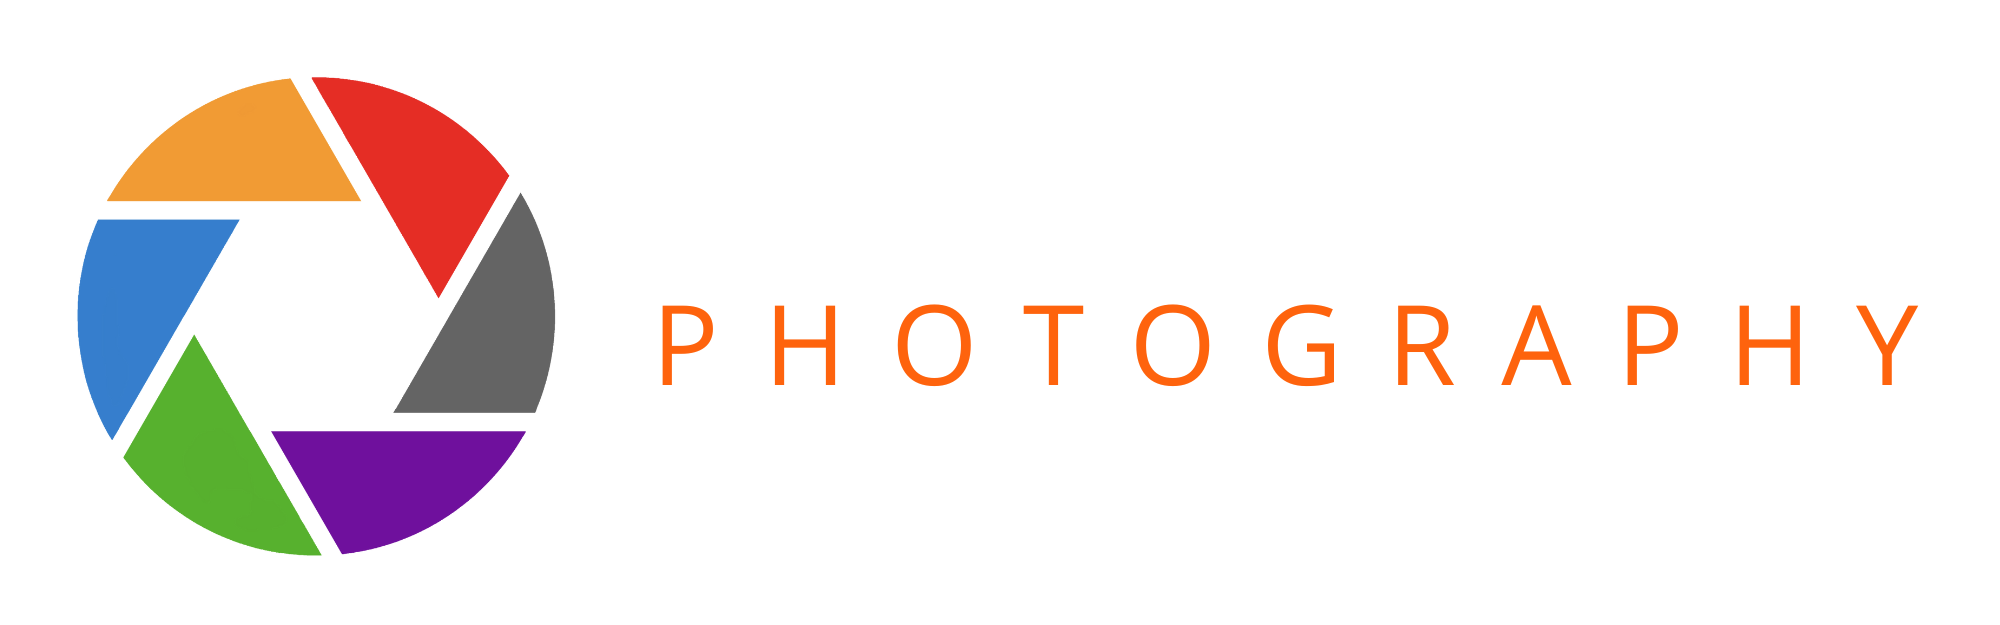 Vernon logo trans white